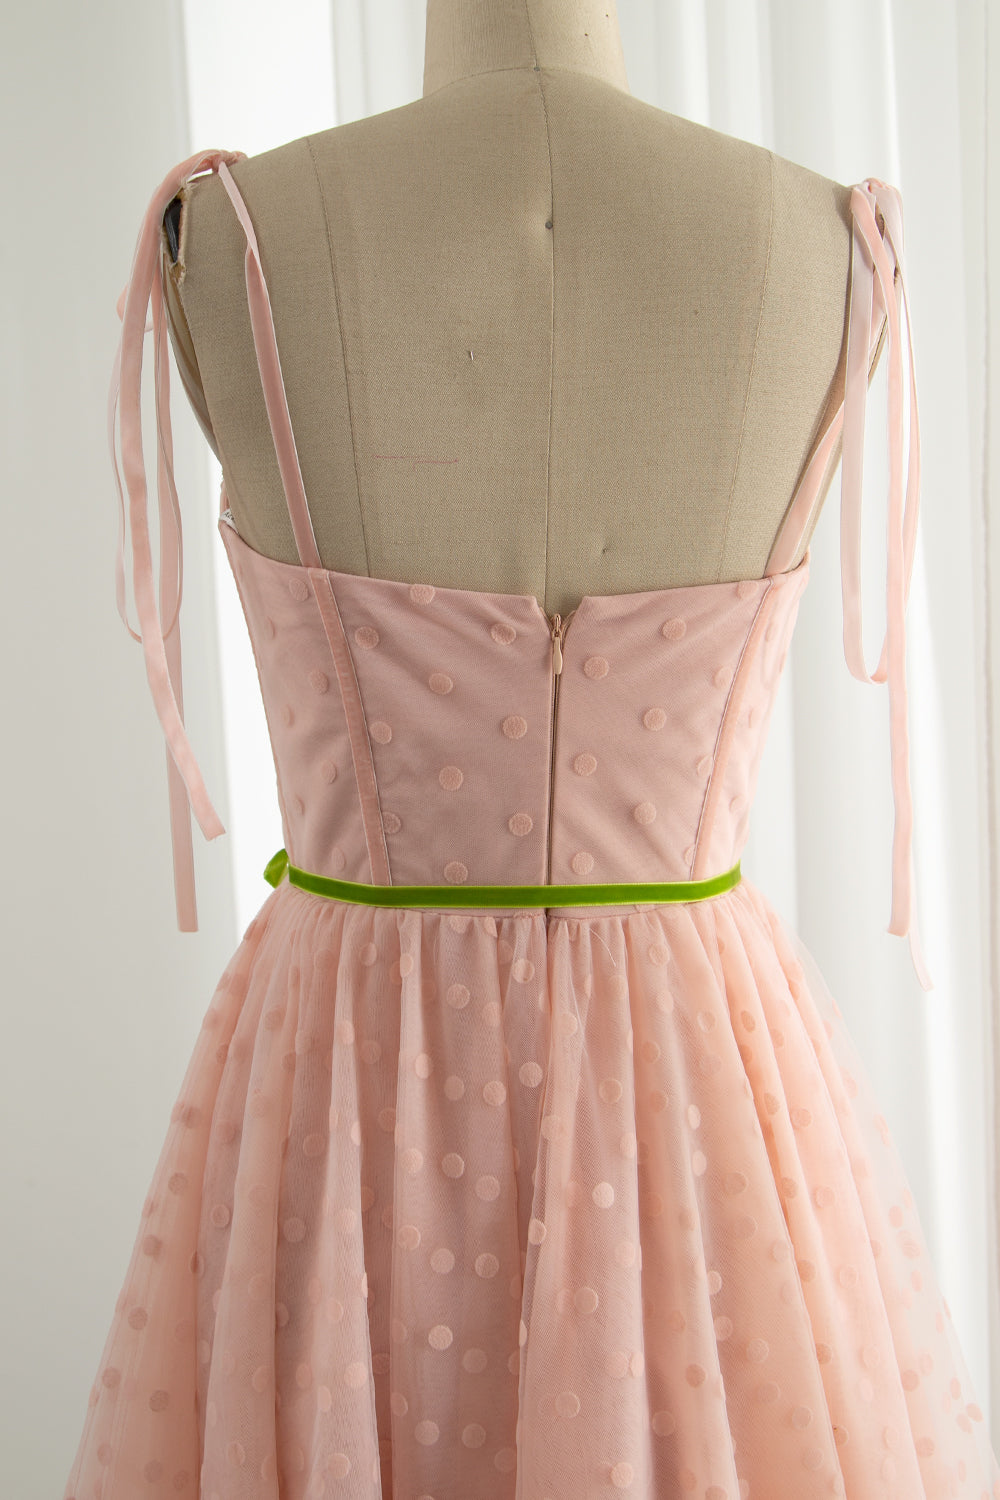 Bow Straps Corset Top Midi Blush Pink Prom Dress